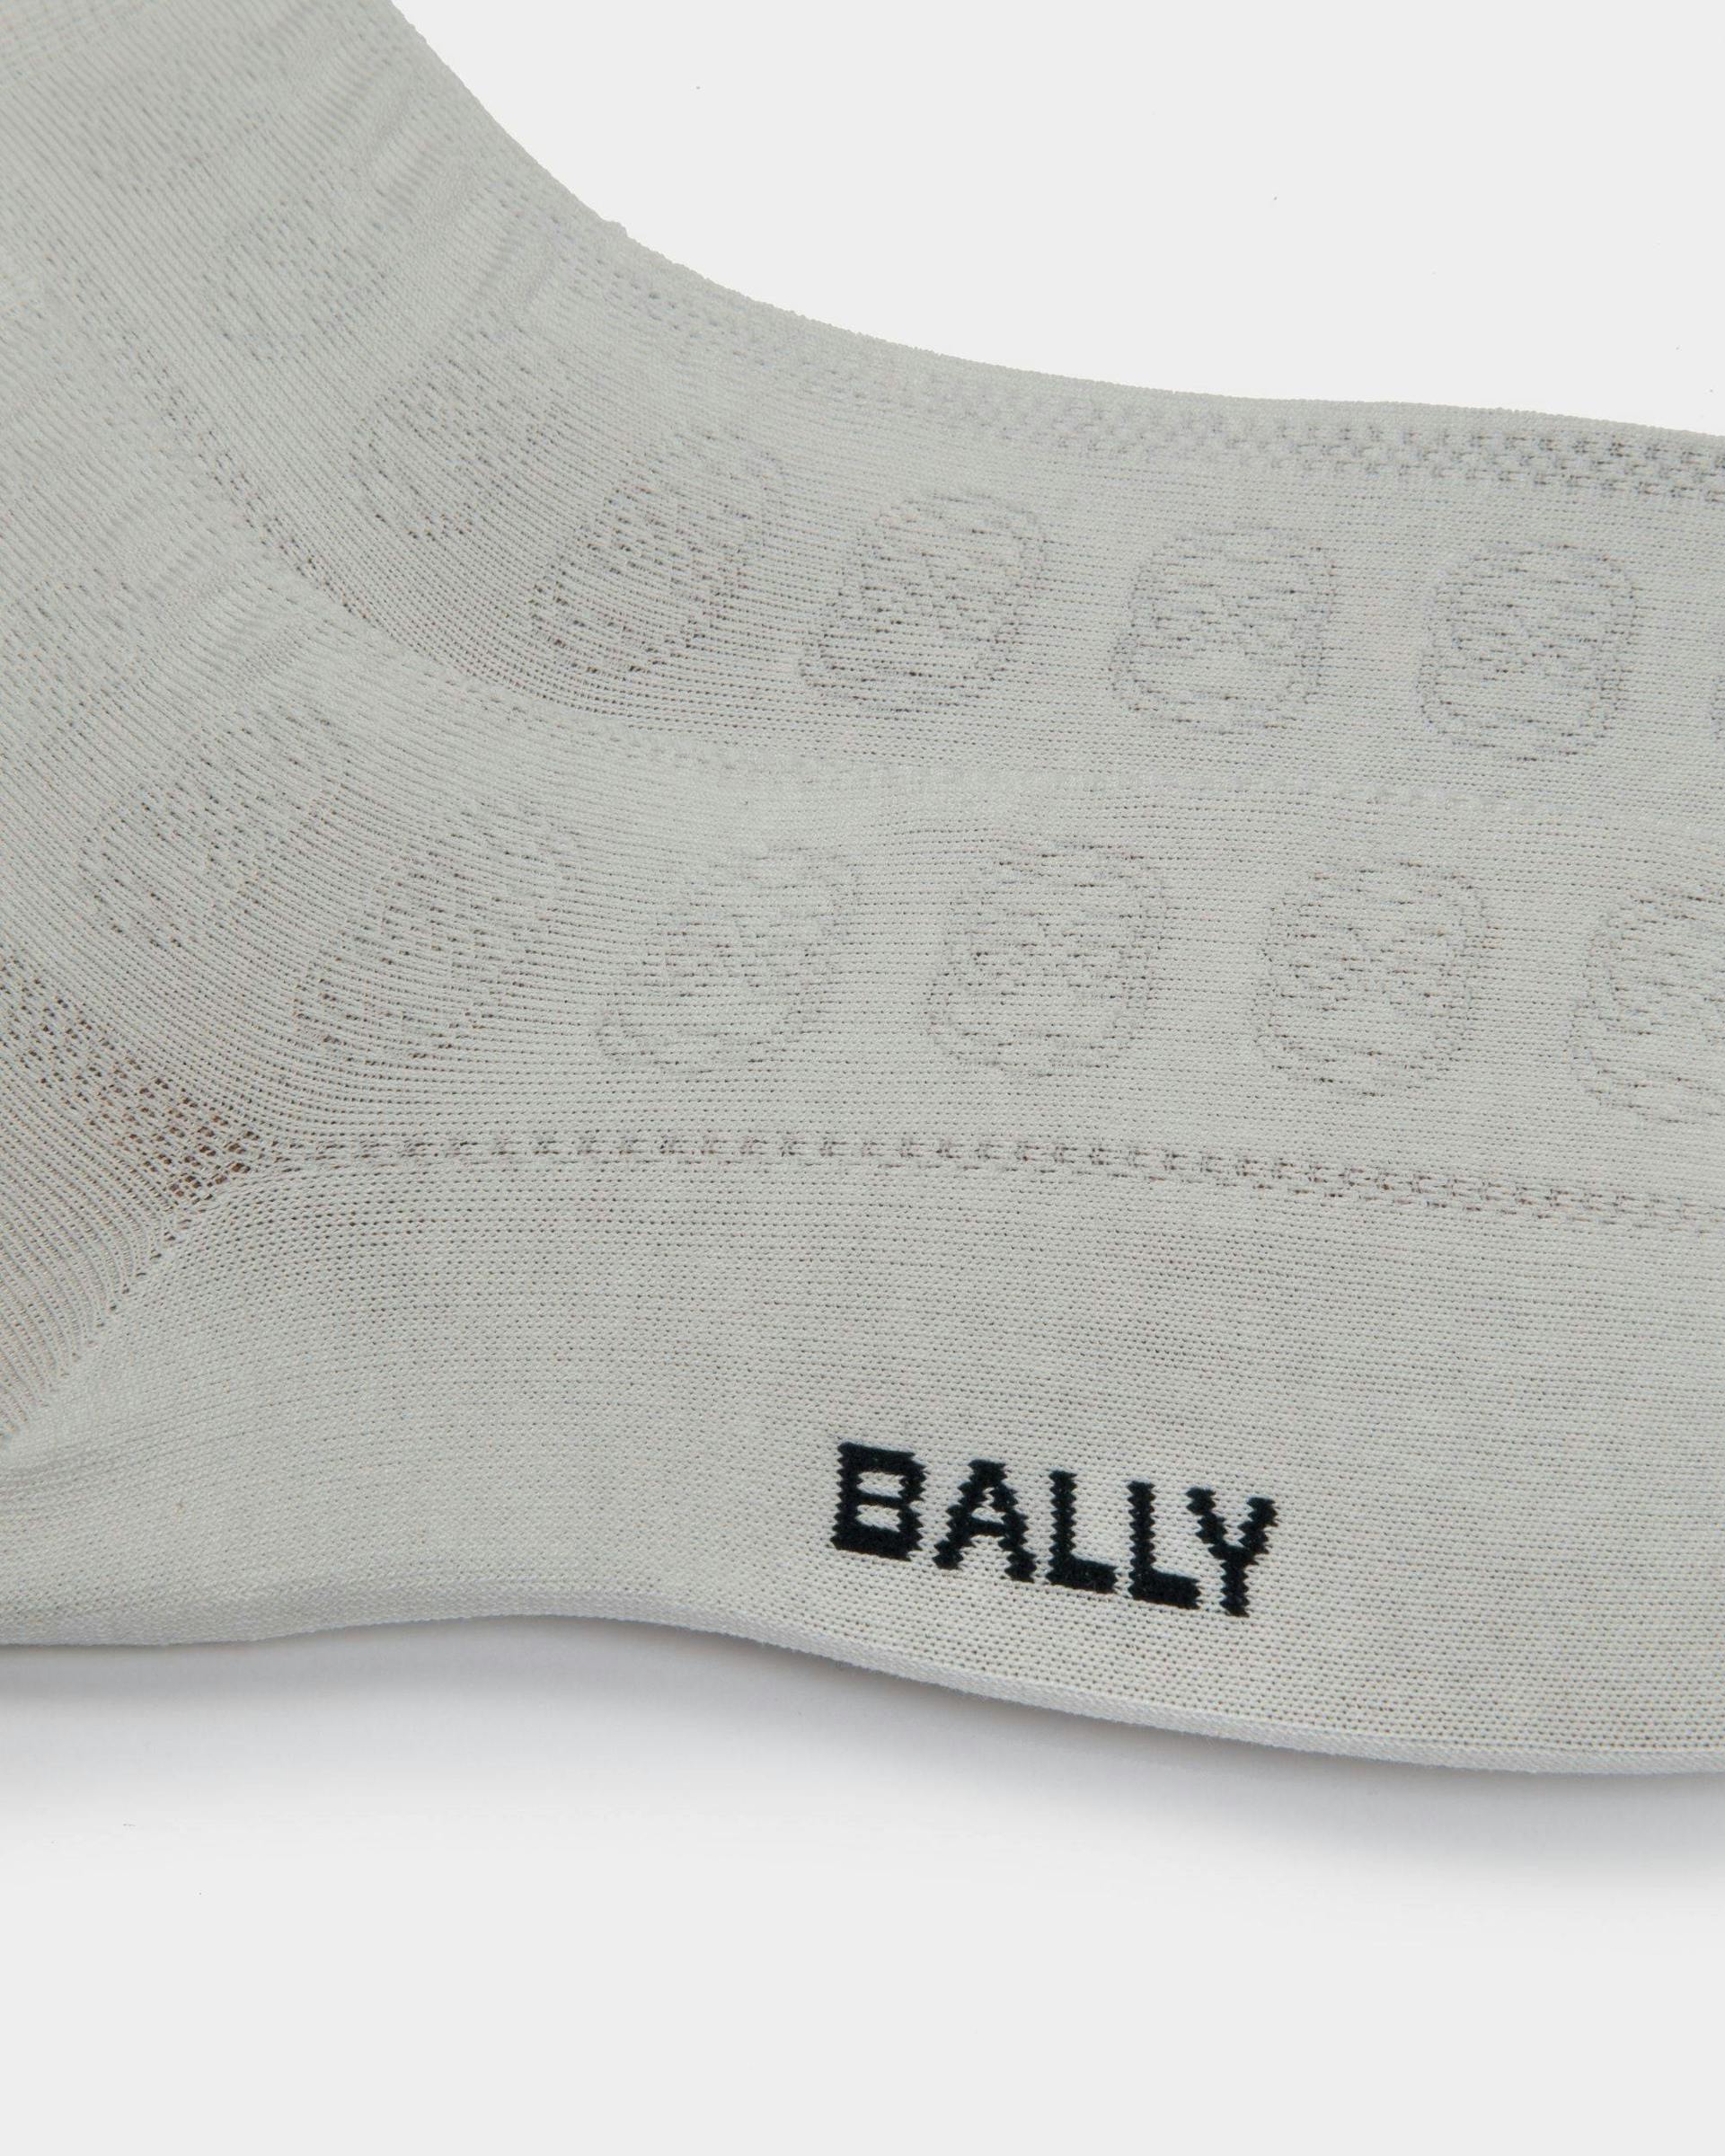 Women's Logo Socks In Beige Cotton | Bally | Still Life Detail